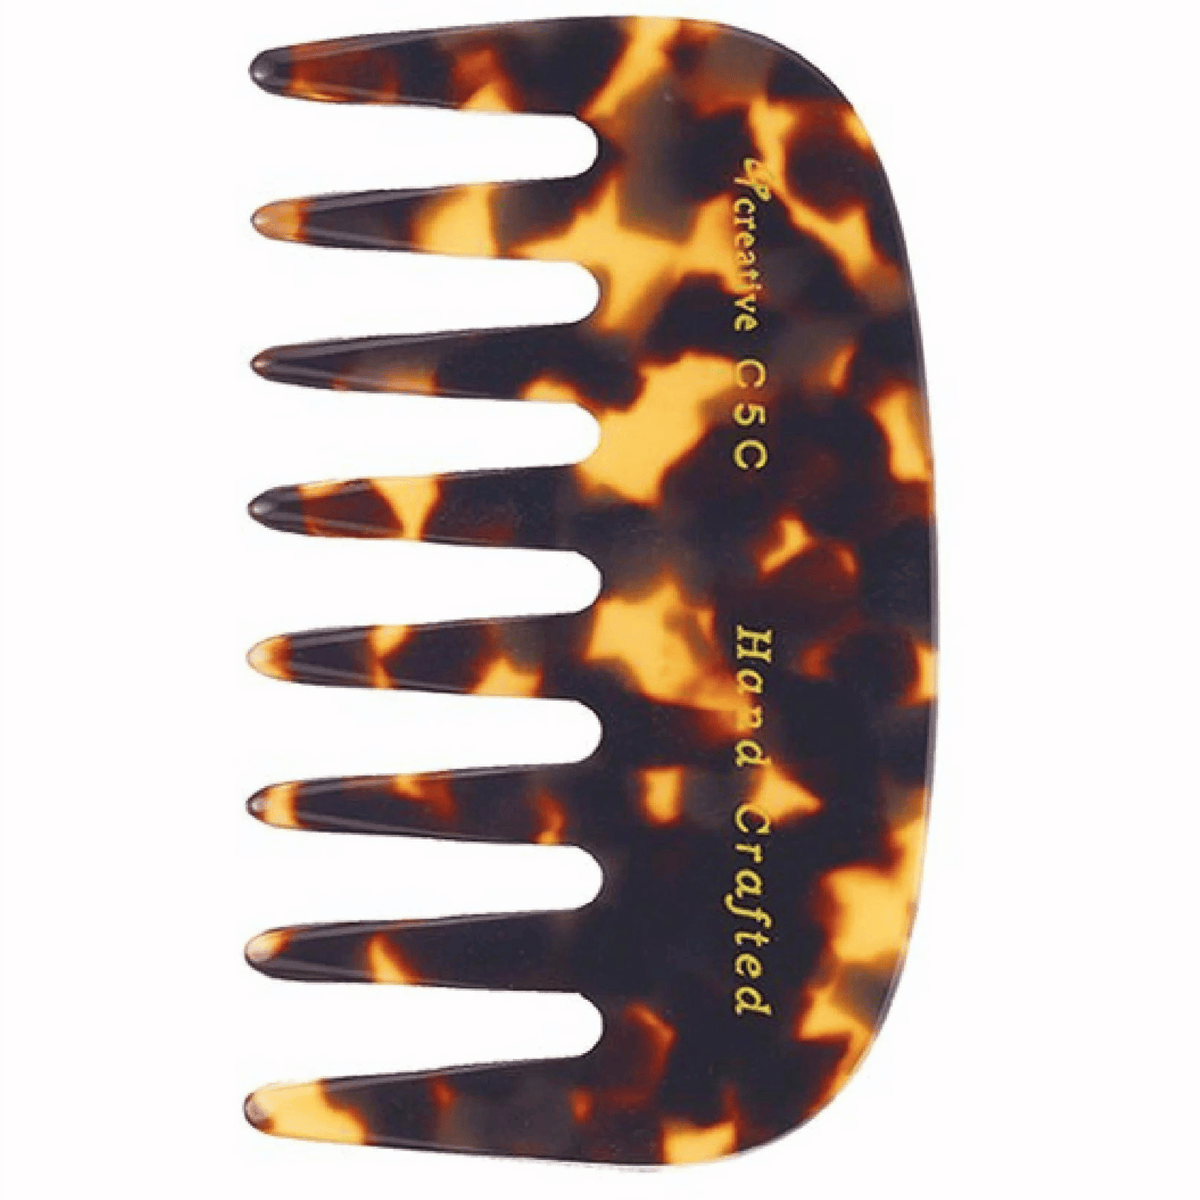 Primary Image of C5C LG Tortoise Hair Pick Pocket Comb